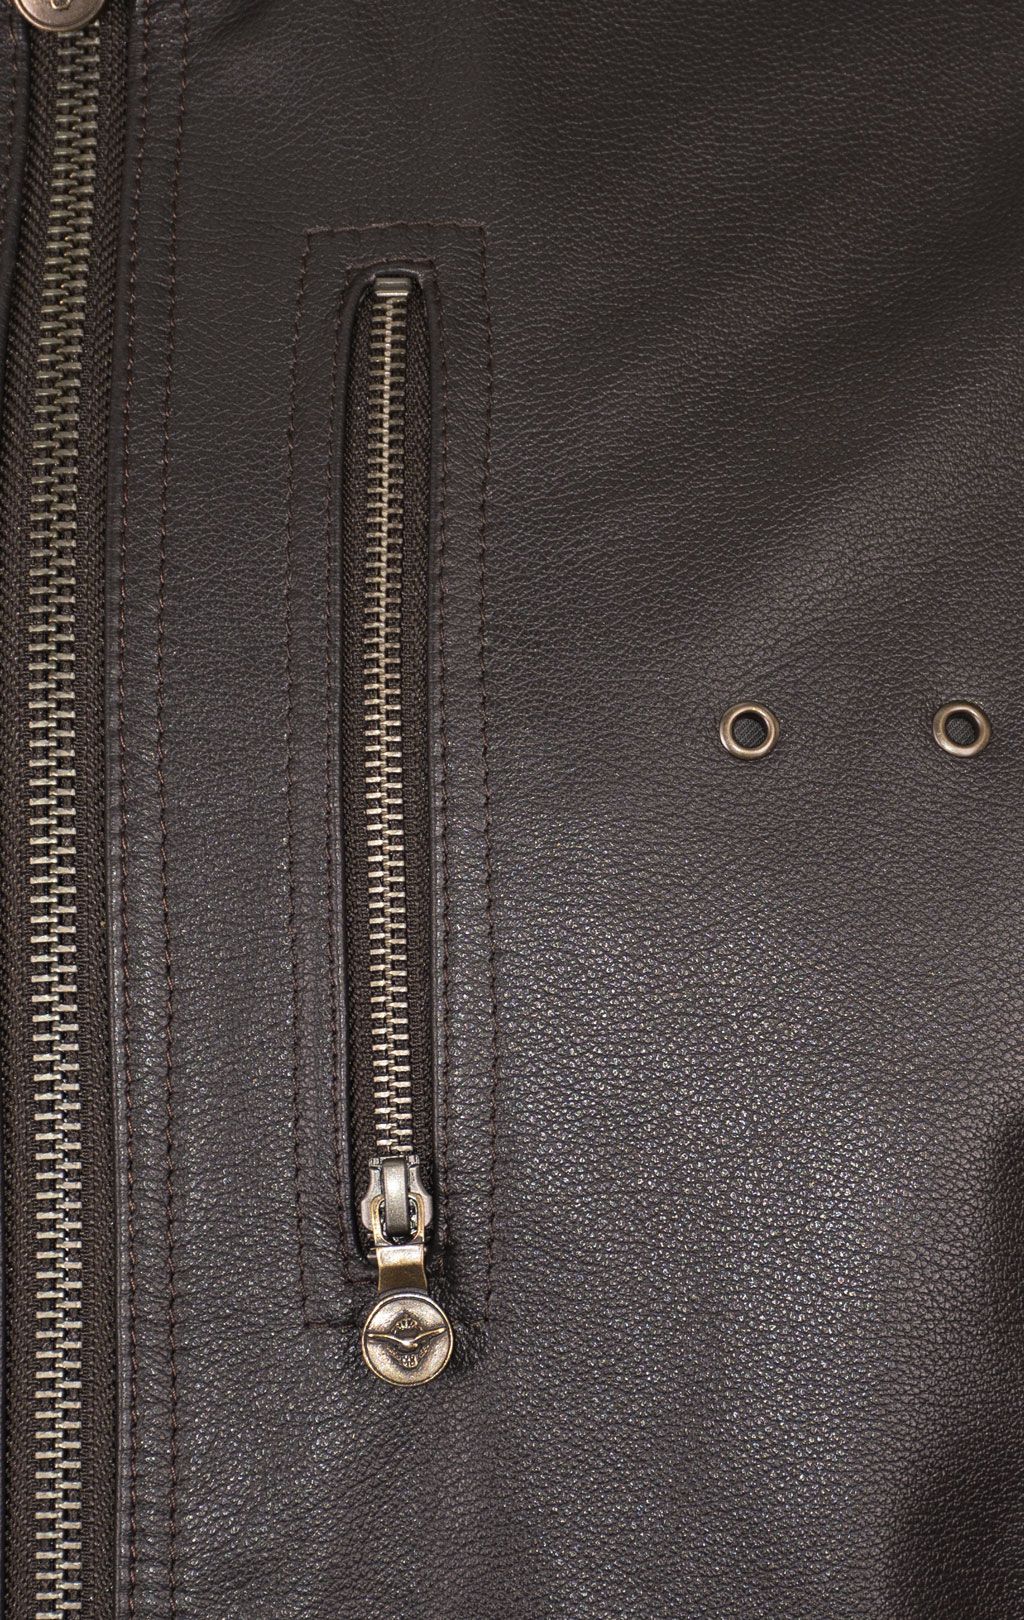 Куртка-бомбер KODZIC CLASSIC SERBIAN PILOT кожа brown (0130) 